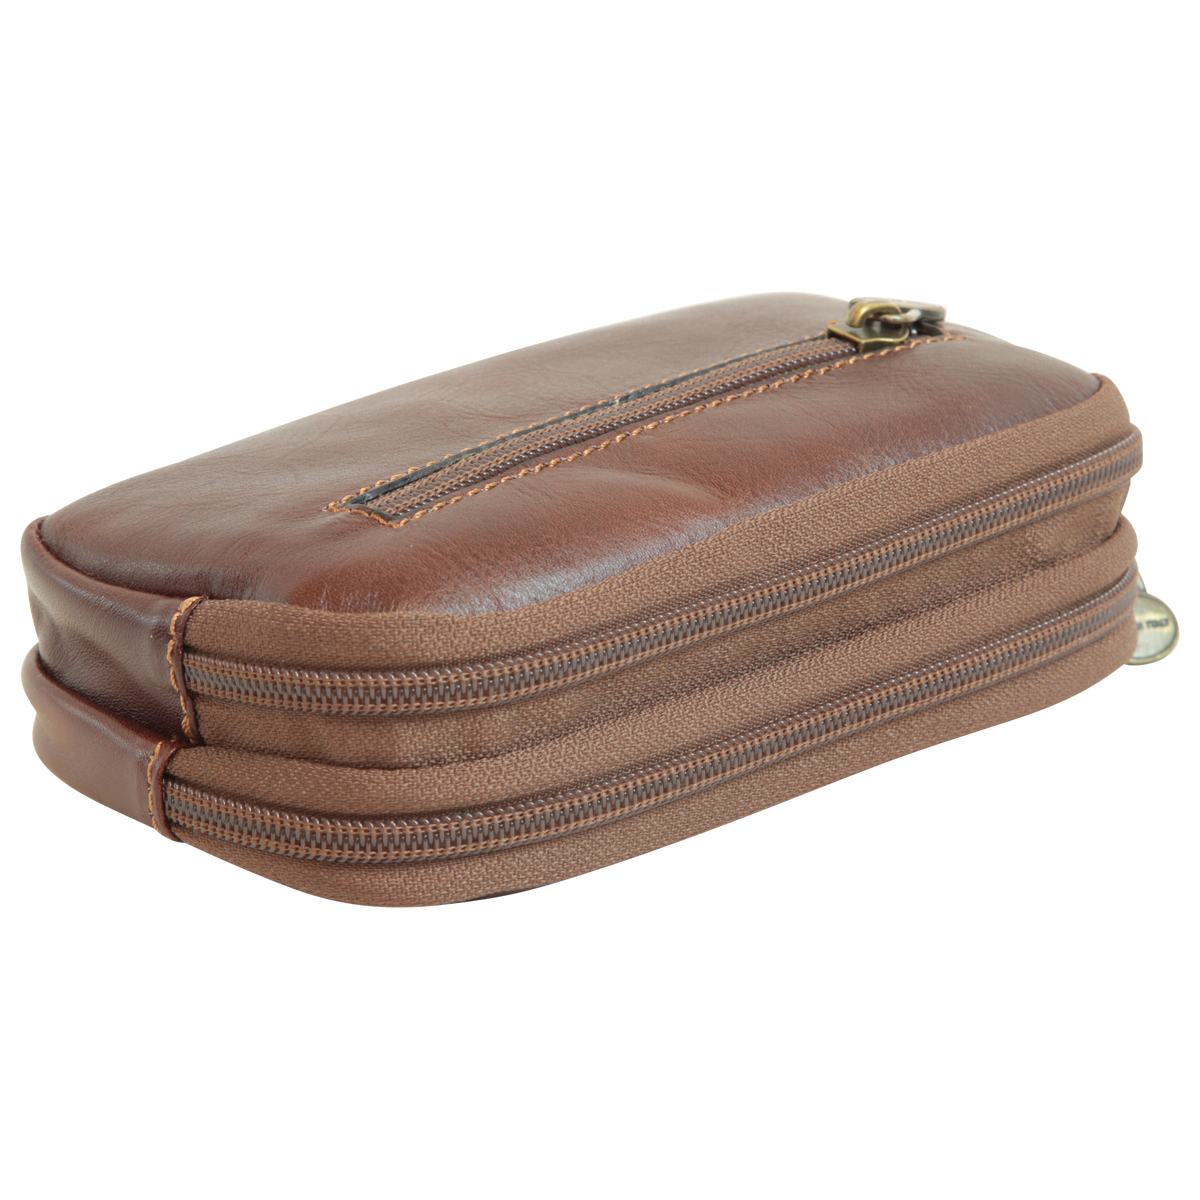 leather belt bag - brown | 413389MA | EURO | Old Angler Firenze